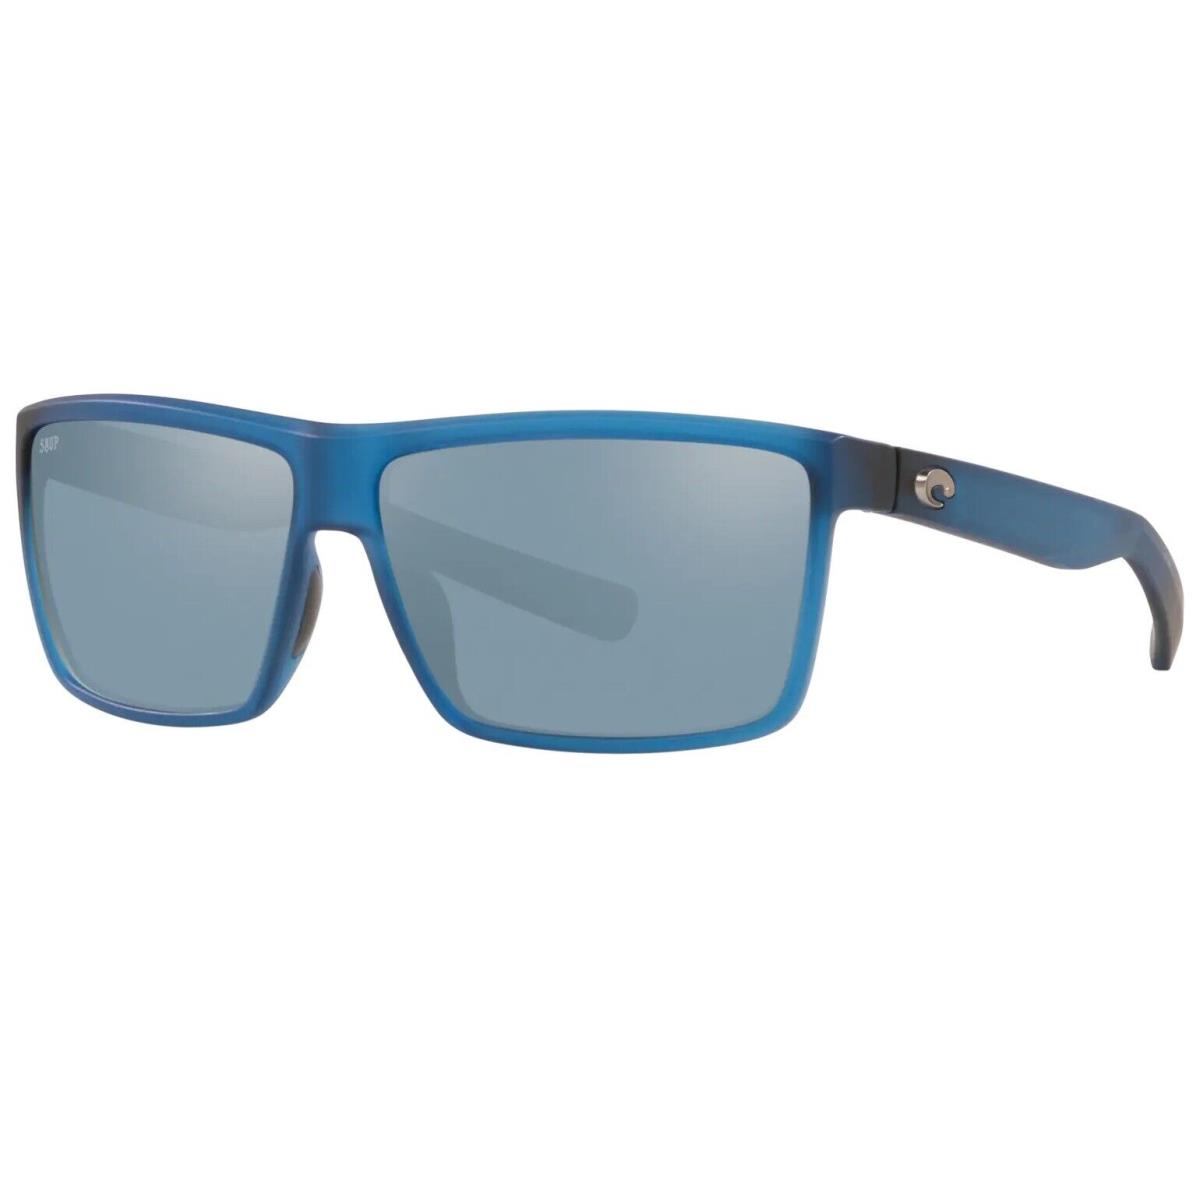 Costa Rinconcito Sunglasses - Polarized - Matte Atlantic Blue W/gray Silver - Frame: Blue, Lens: Gray